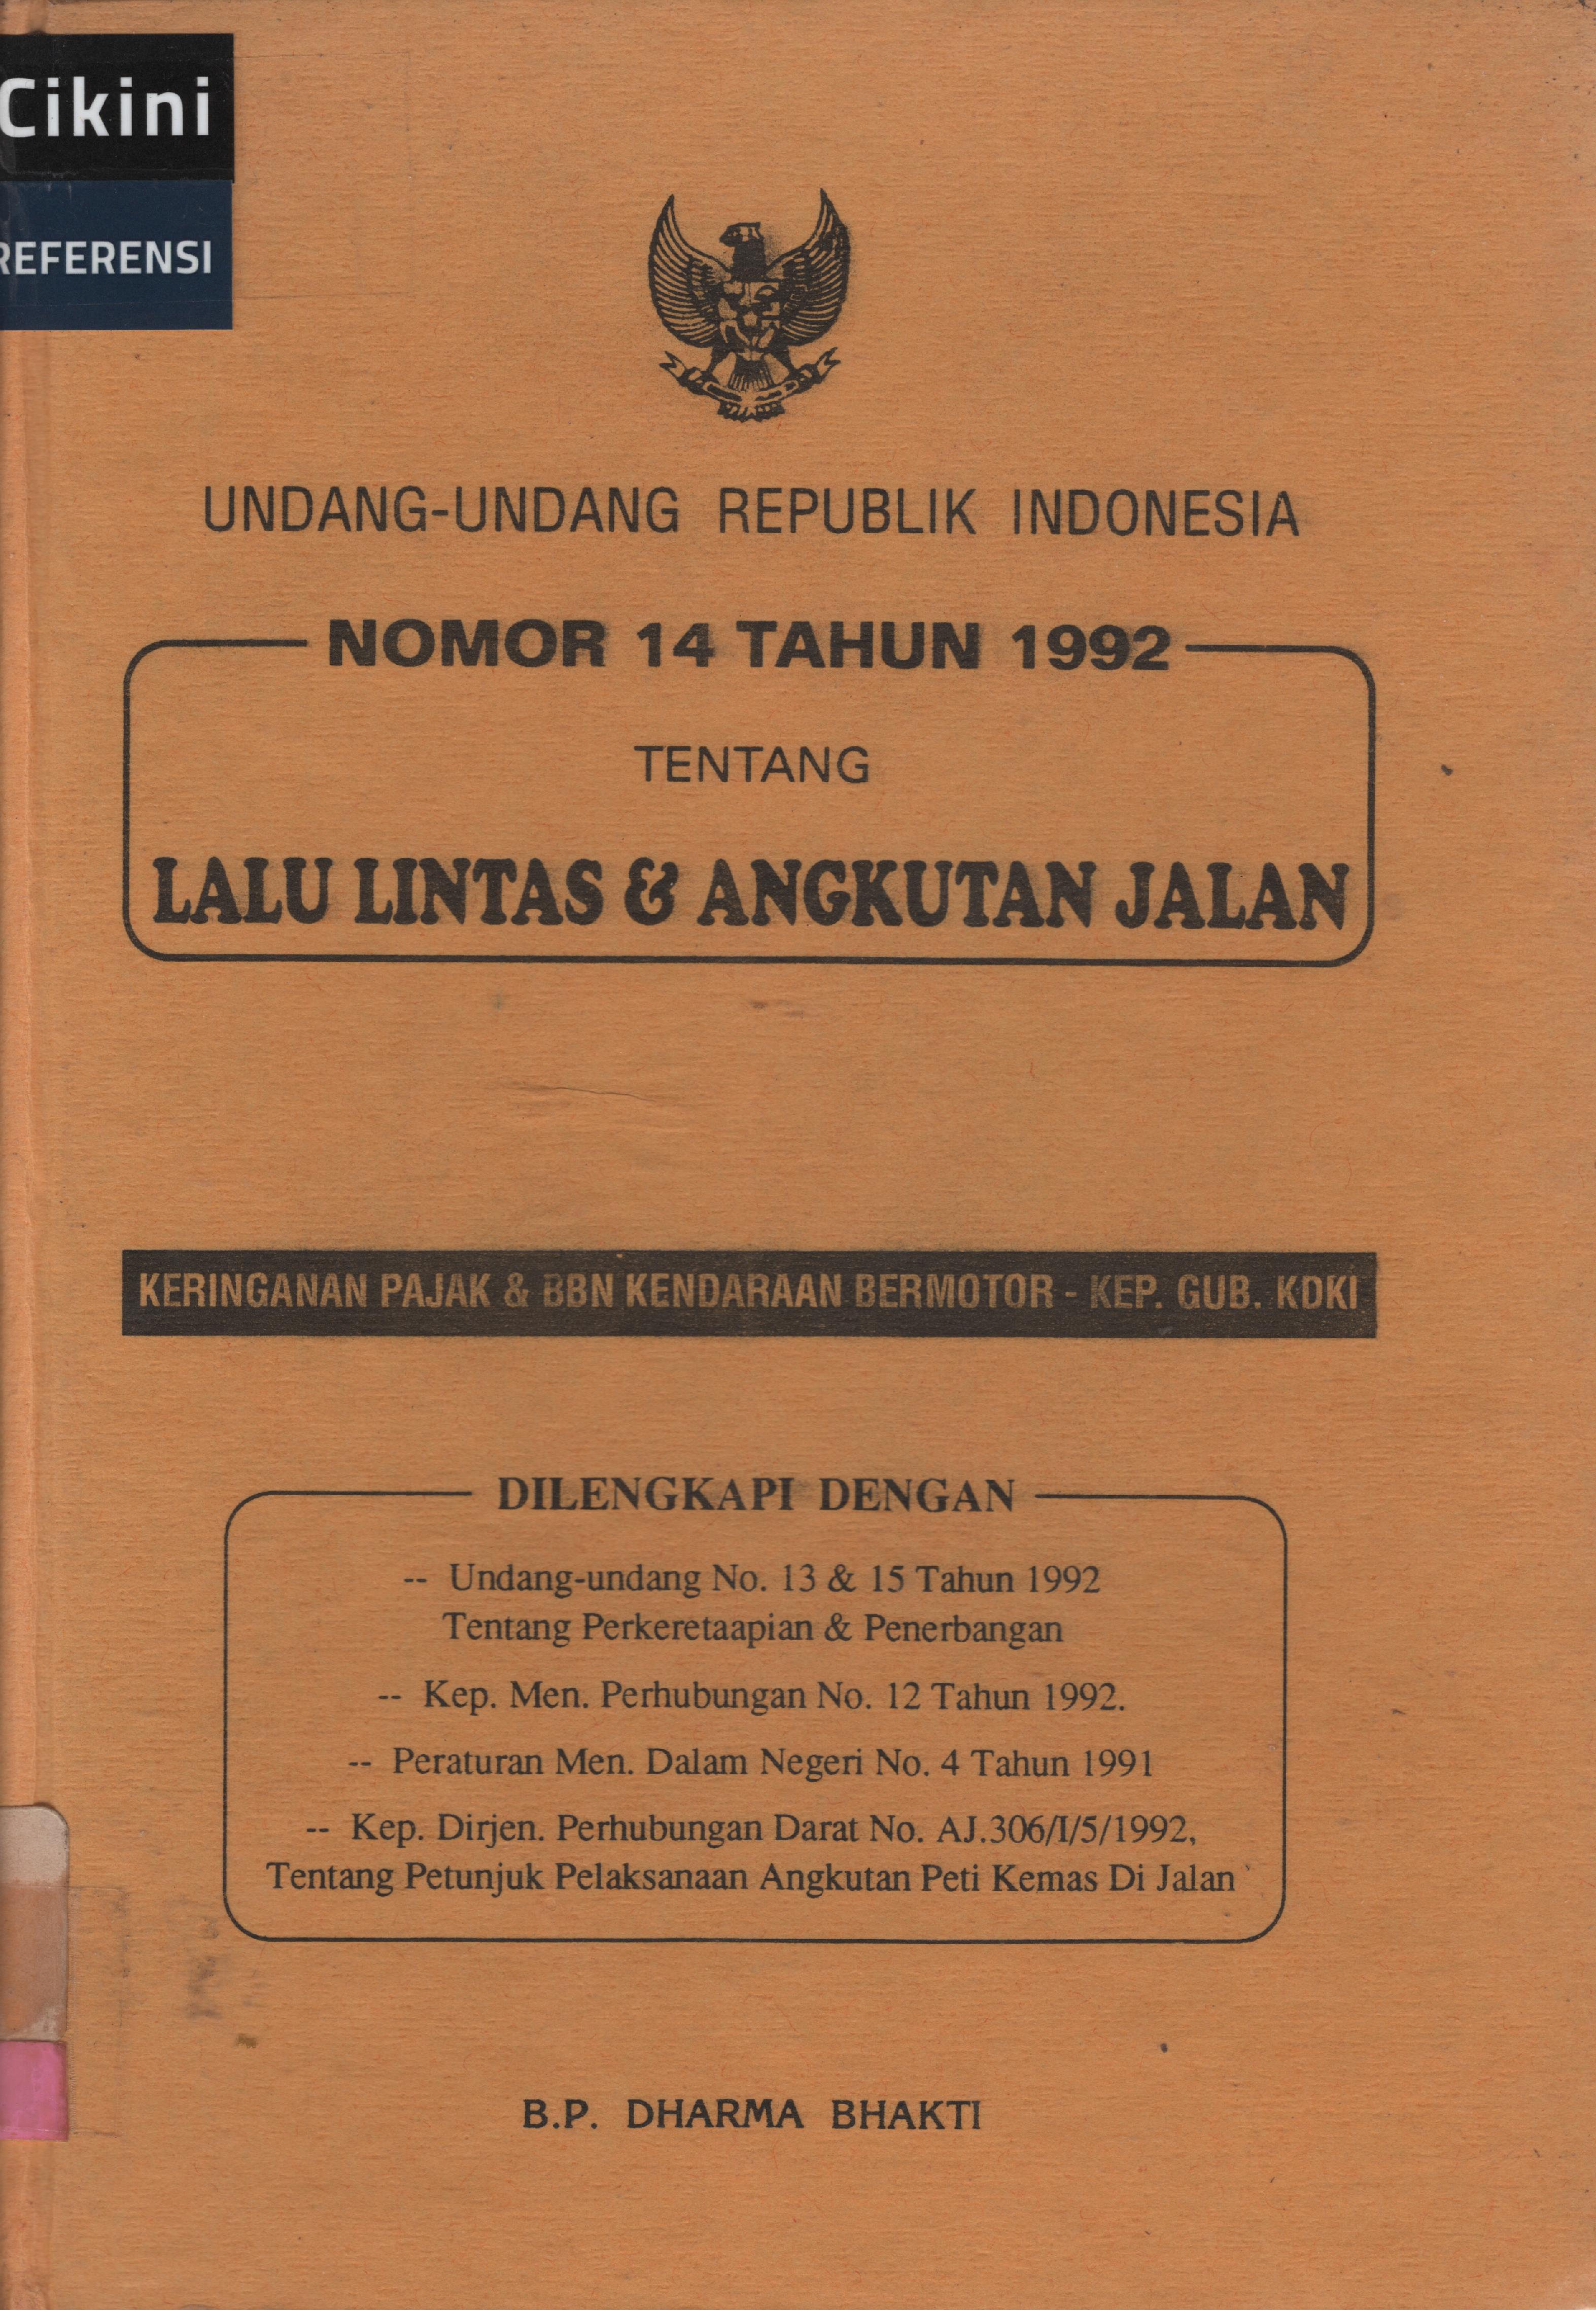 Undang-undang republik Indonesia nomor 14 tahun 1992 tentang lalu lintas dan angkutan jalan